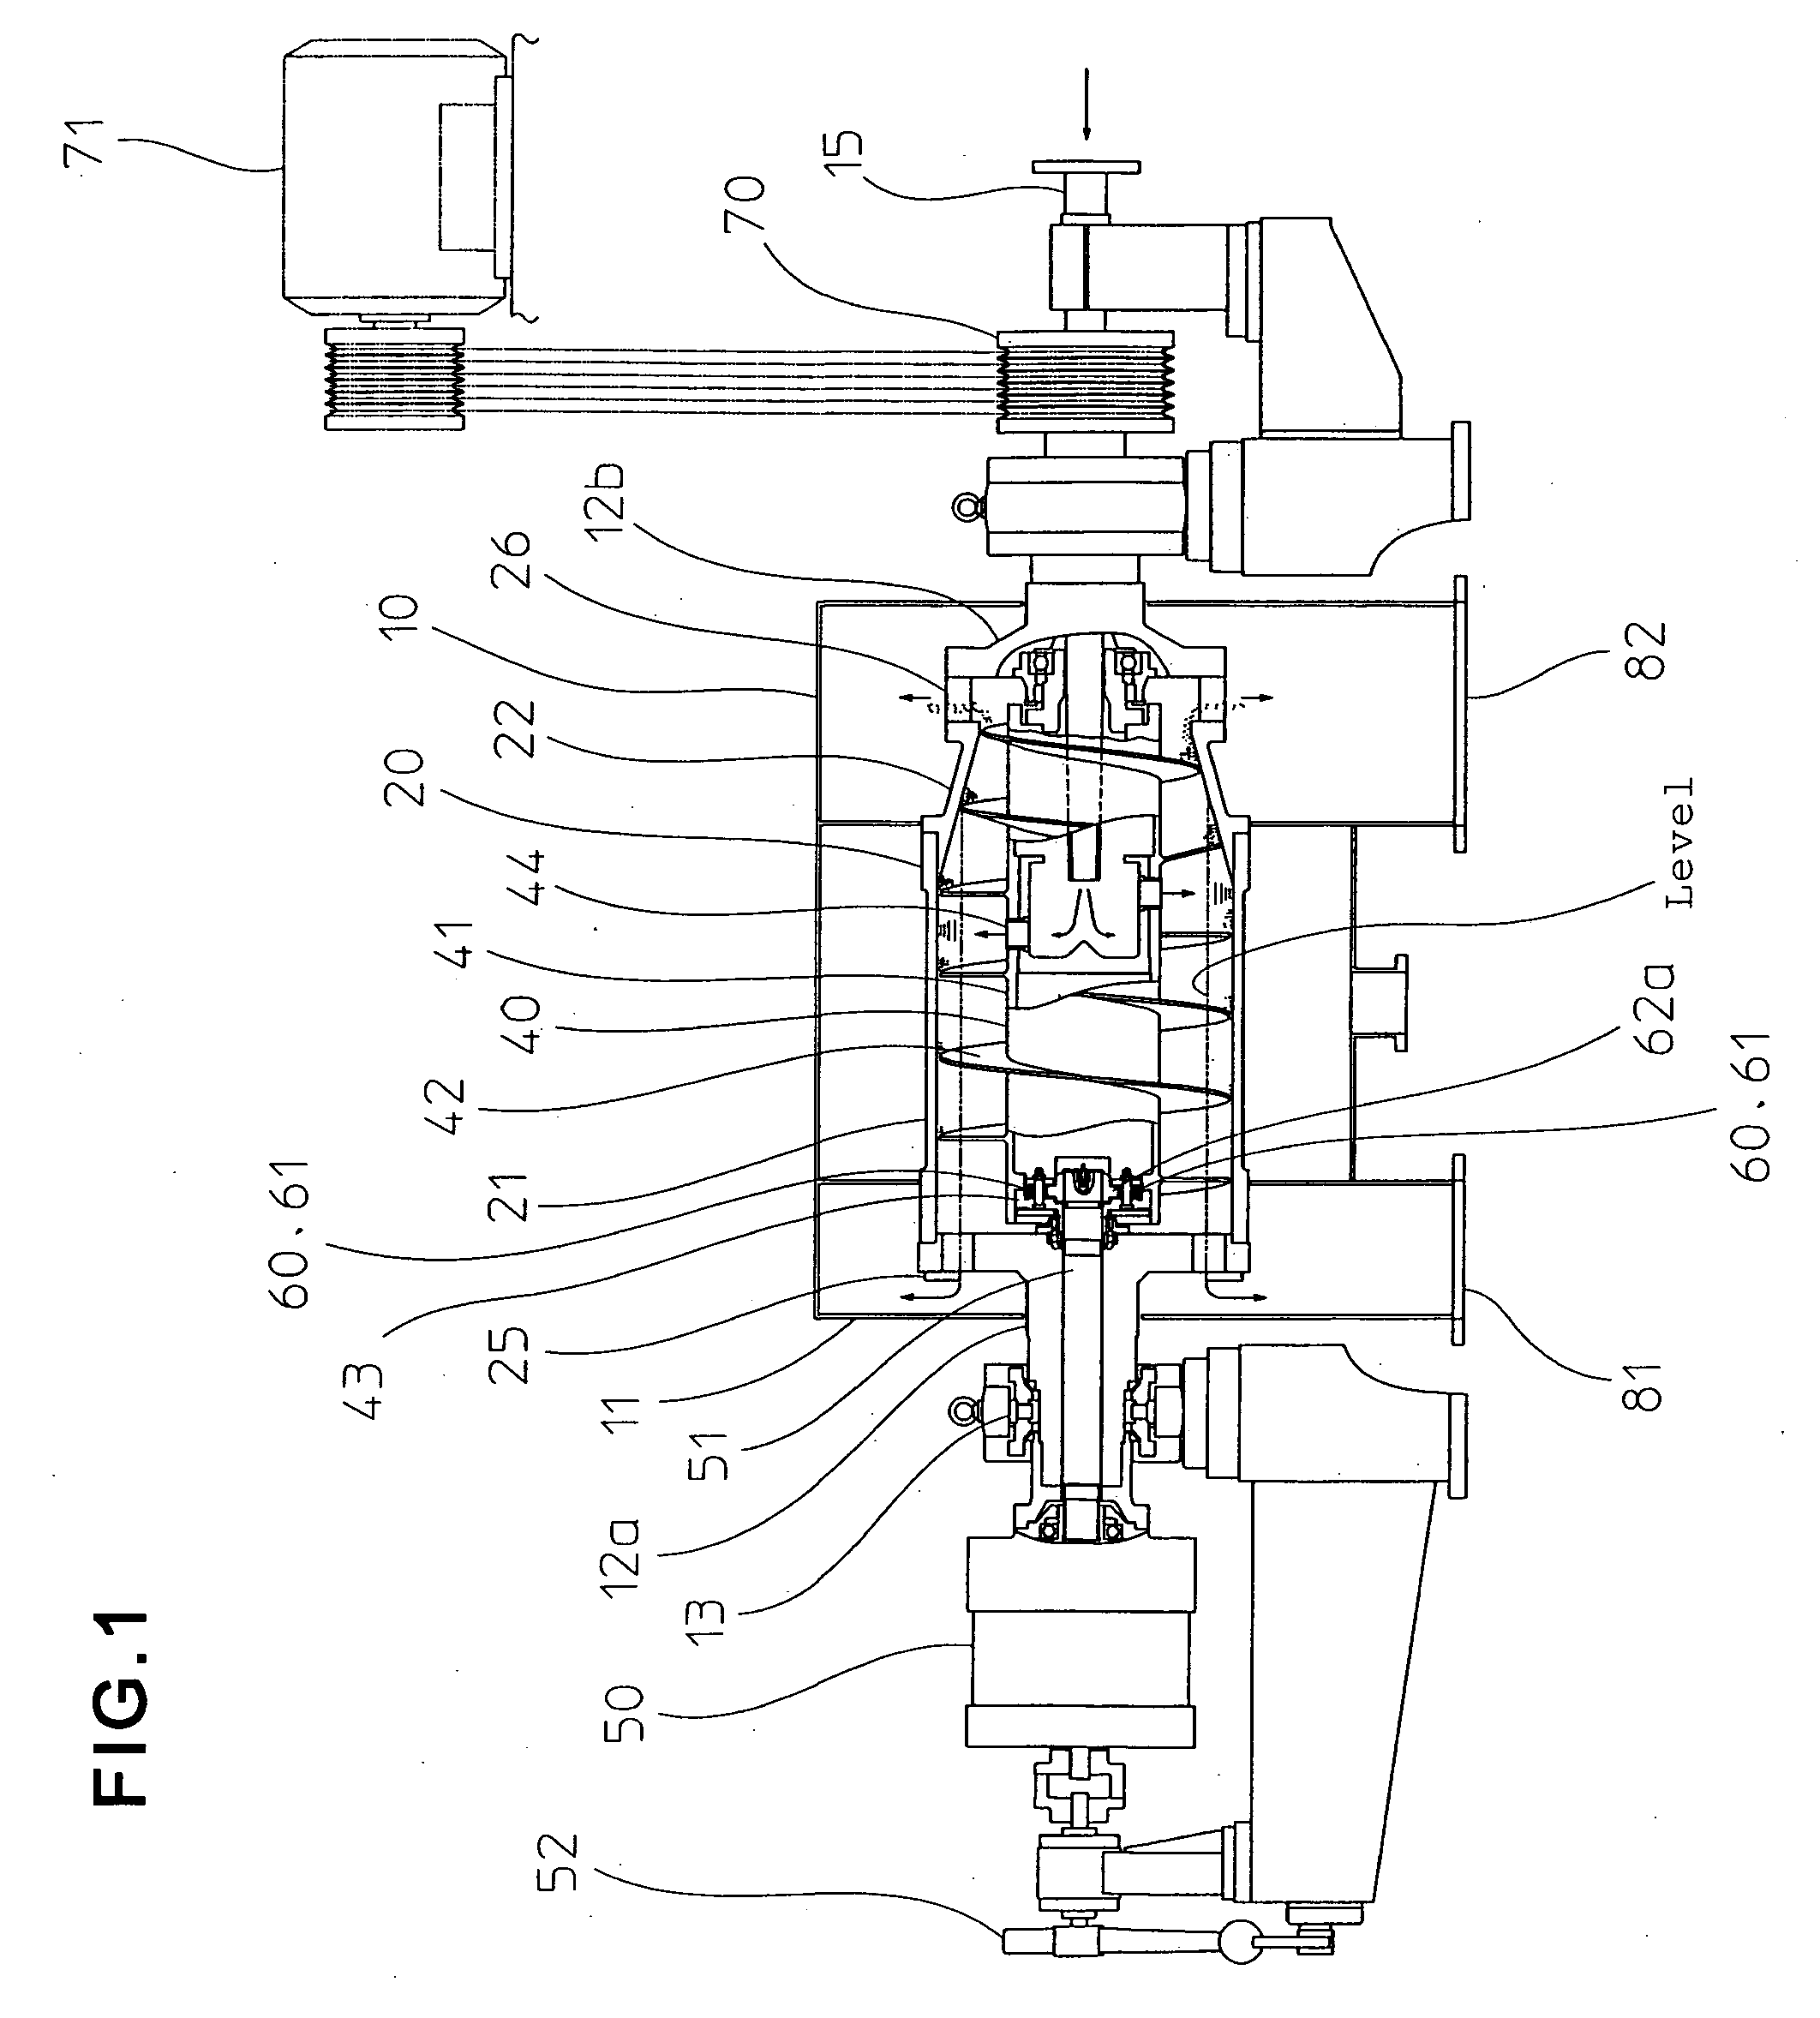 Decanter type centrifugal separator